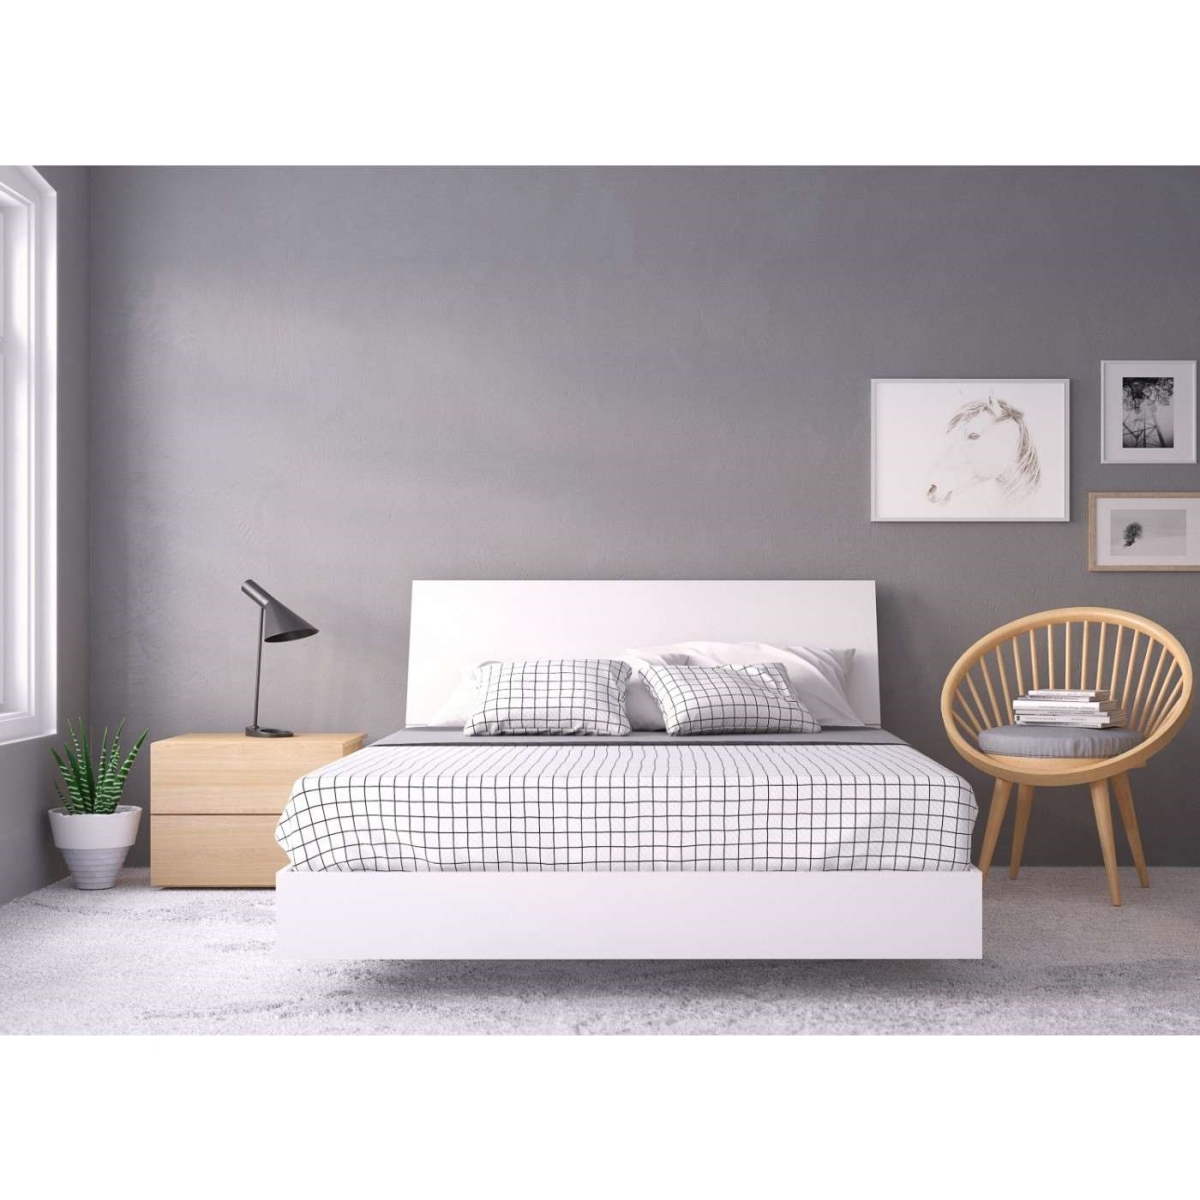 400831 Esker Bedroom Set, Natural Maple & White - Queen Size